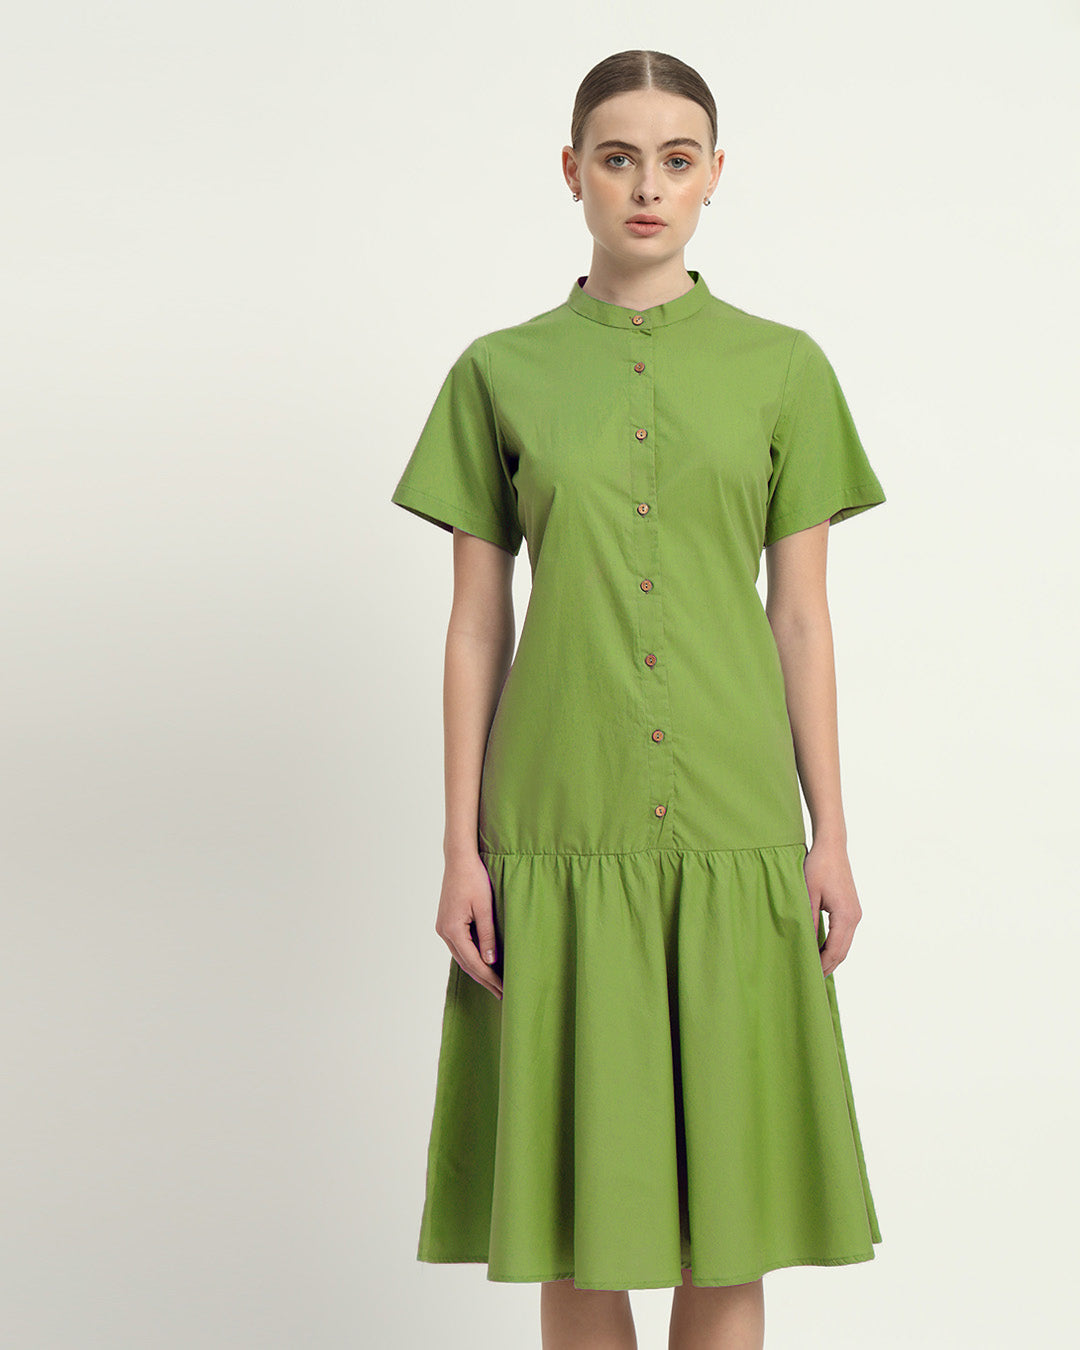 The Melrose Fern Cotton Dress